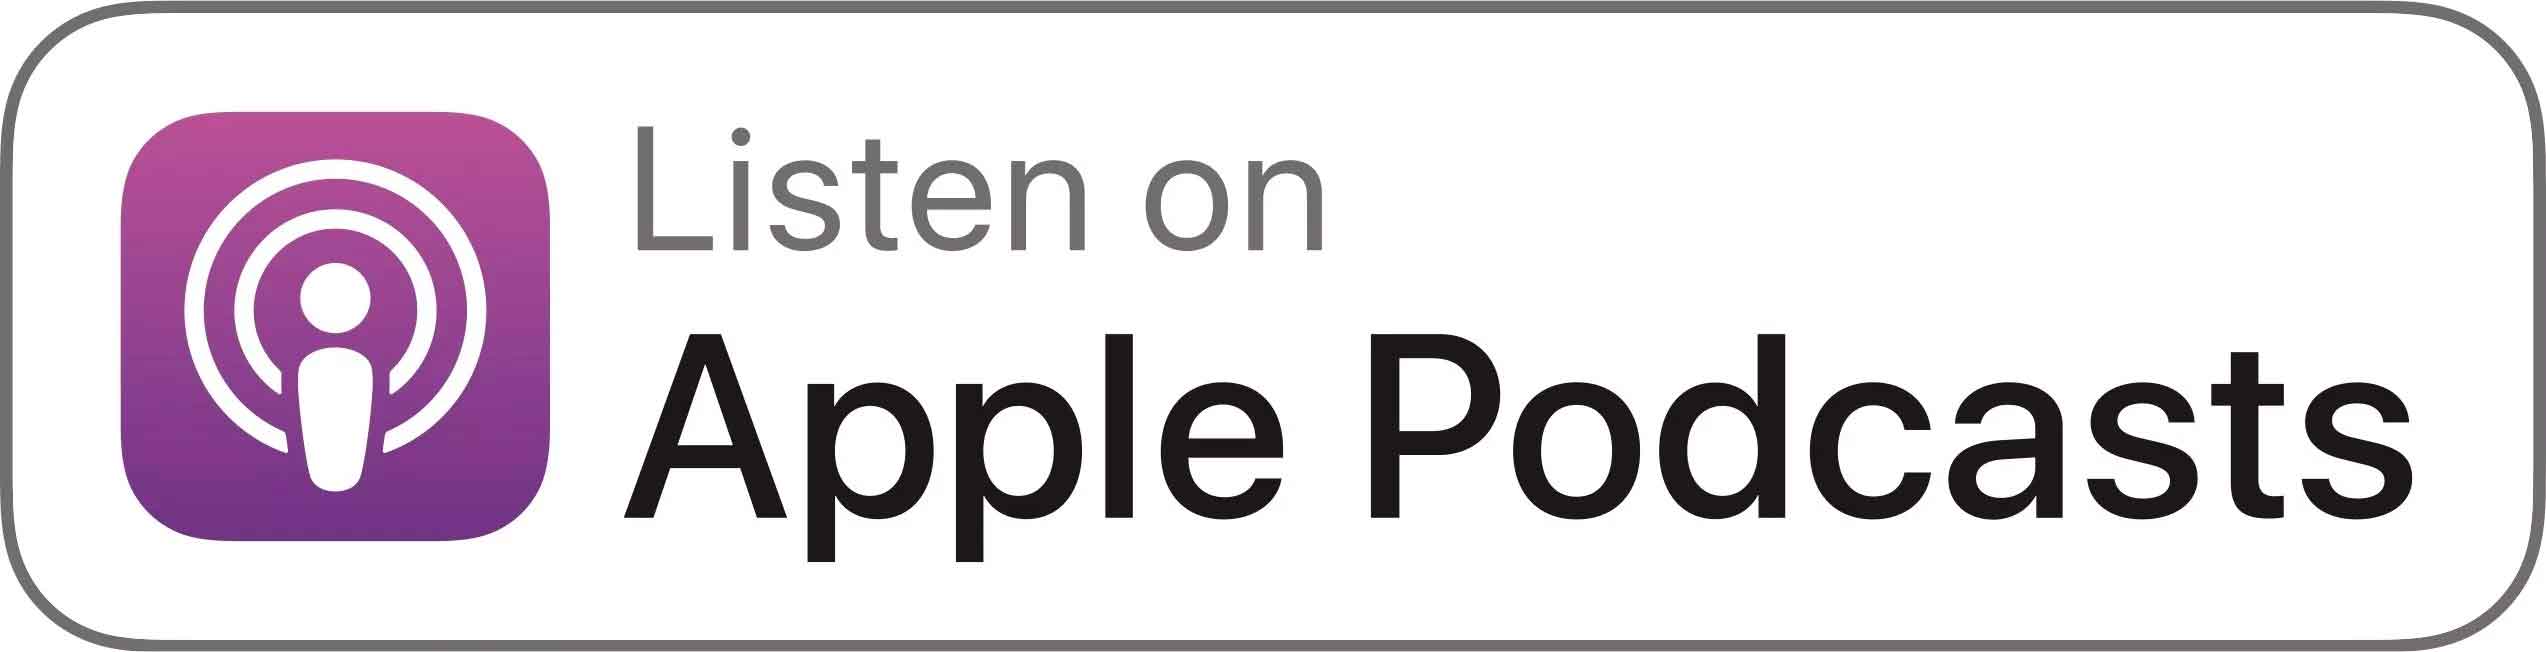 apple-podcast-logo.jpg__PID:cf1c5216-5fd4-4d5f-b736-272180e2538b